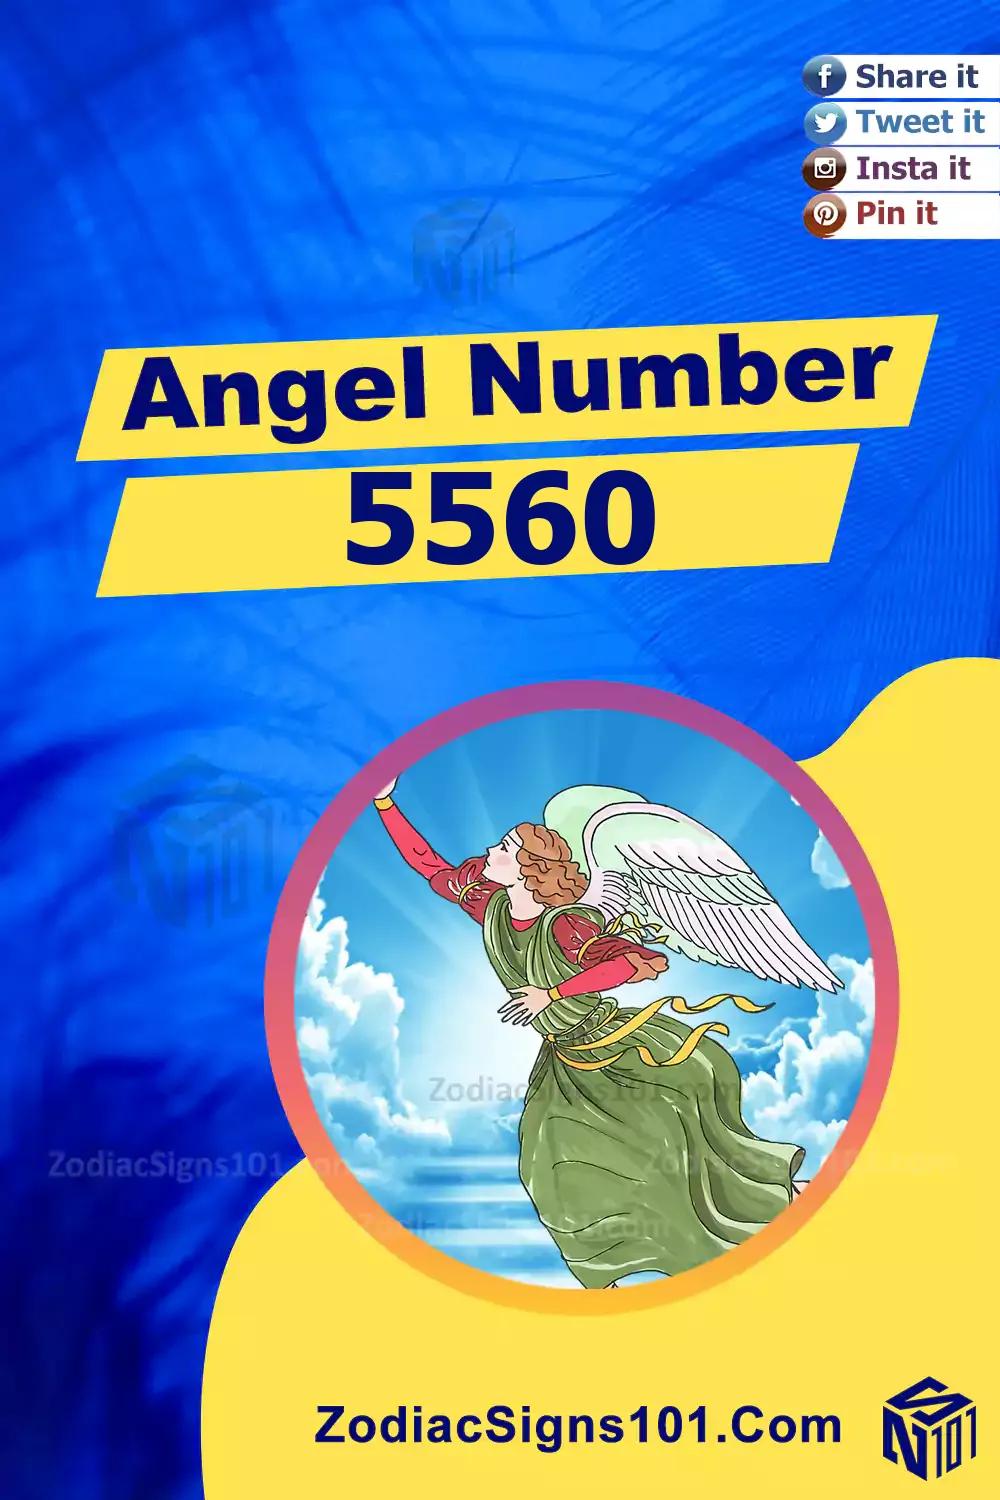 5560-Angel-Number-Meaning.jpg